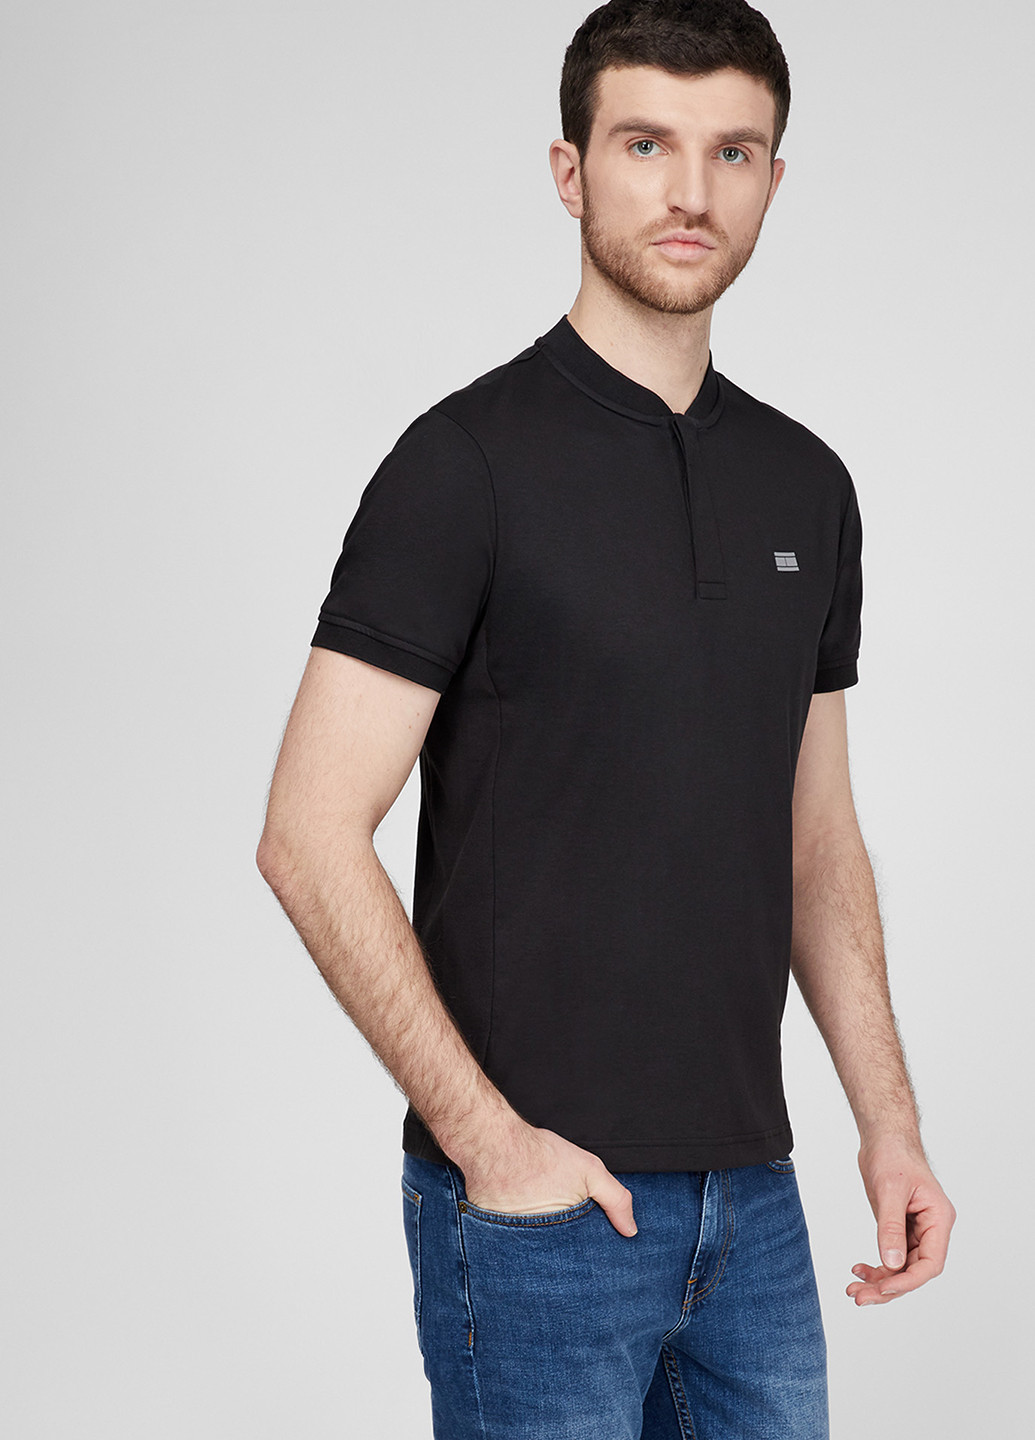 Черная футболка-поло для мужчин Tommy Hilfiger с логотипом